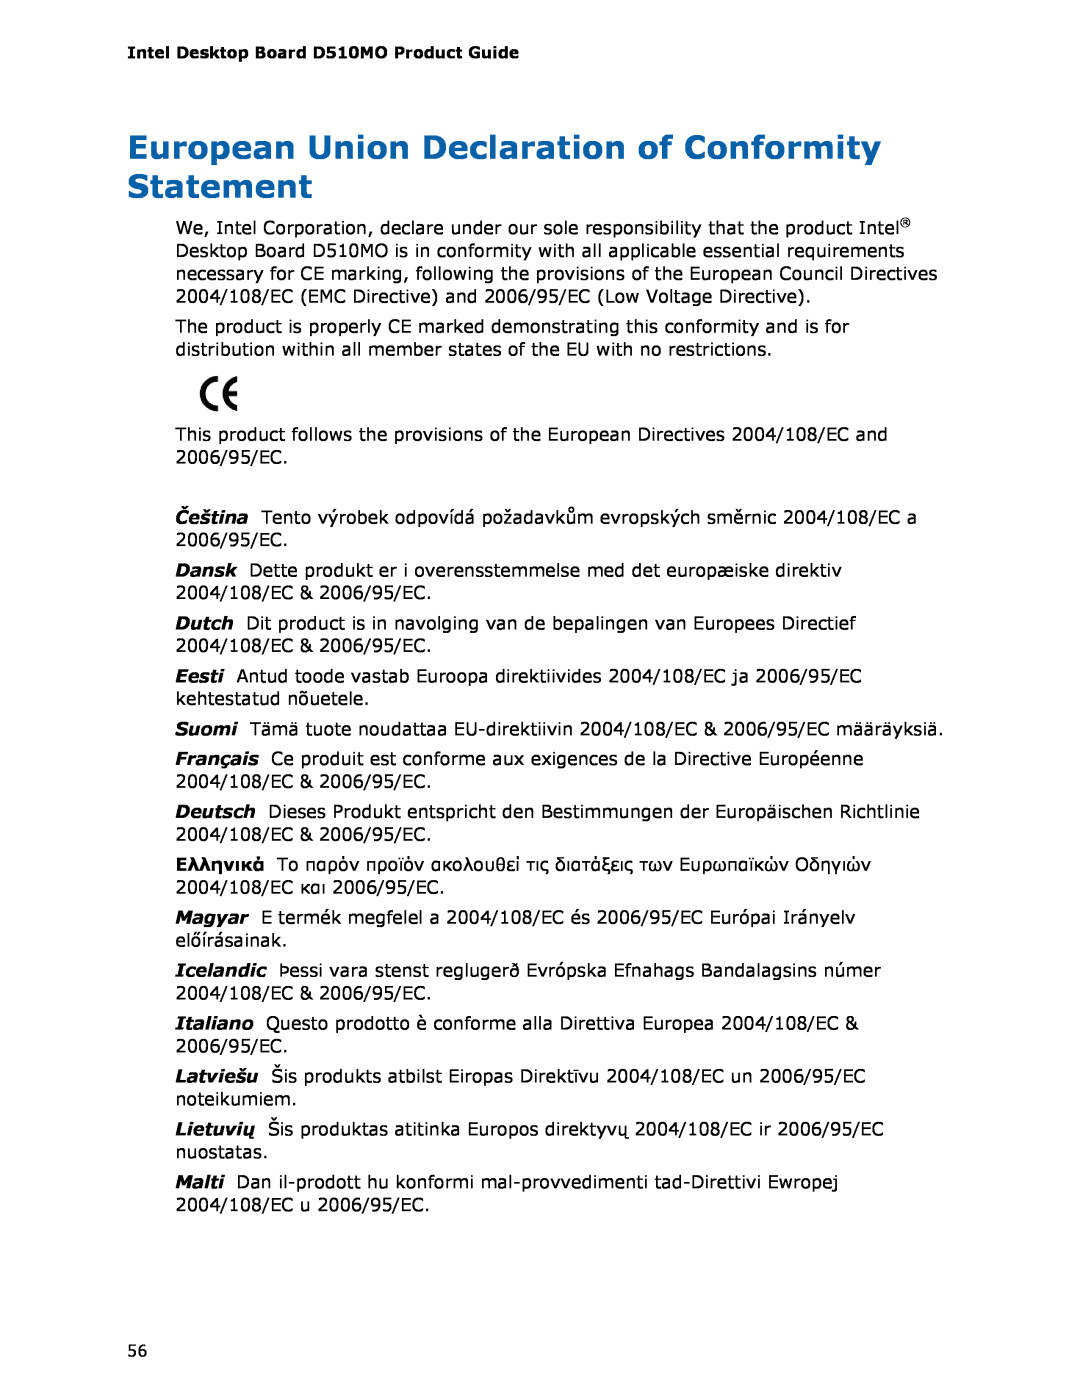 Intel D510MO manual European Union Declaration of Conformity Statement 